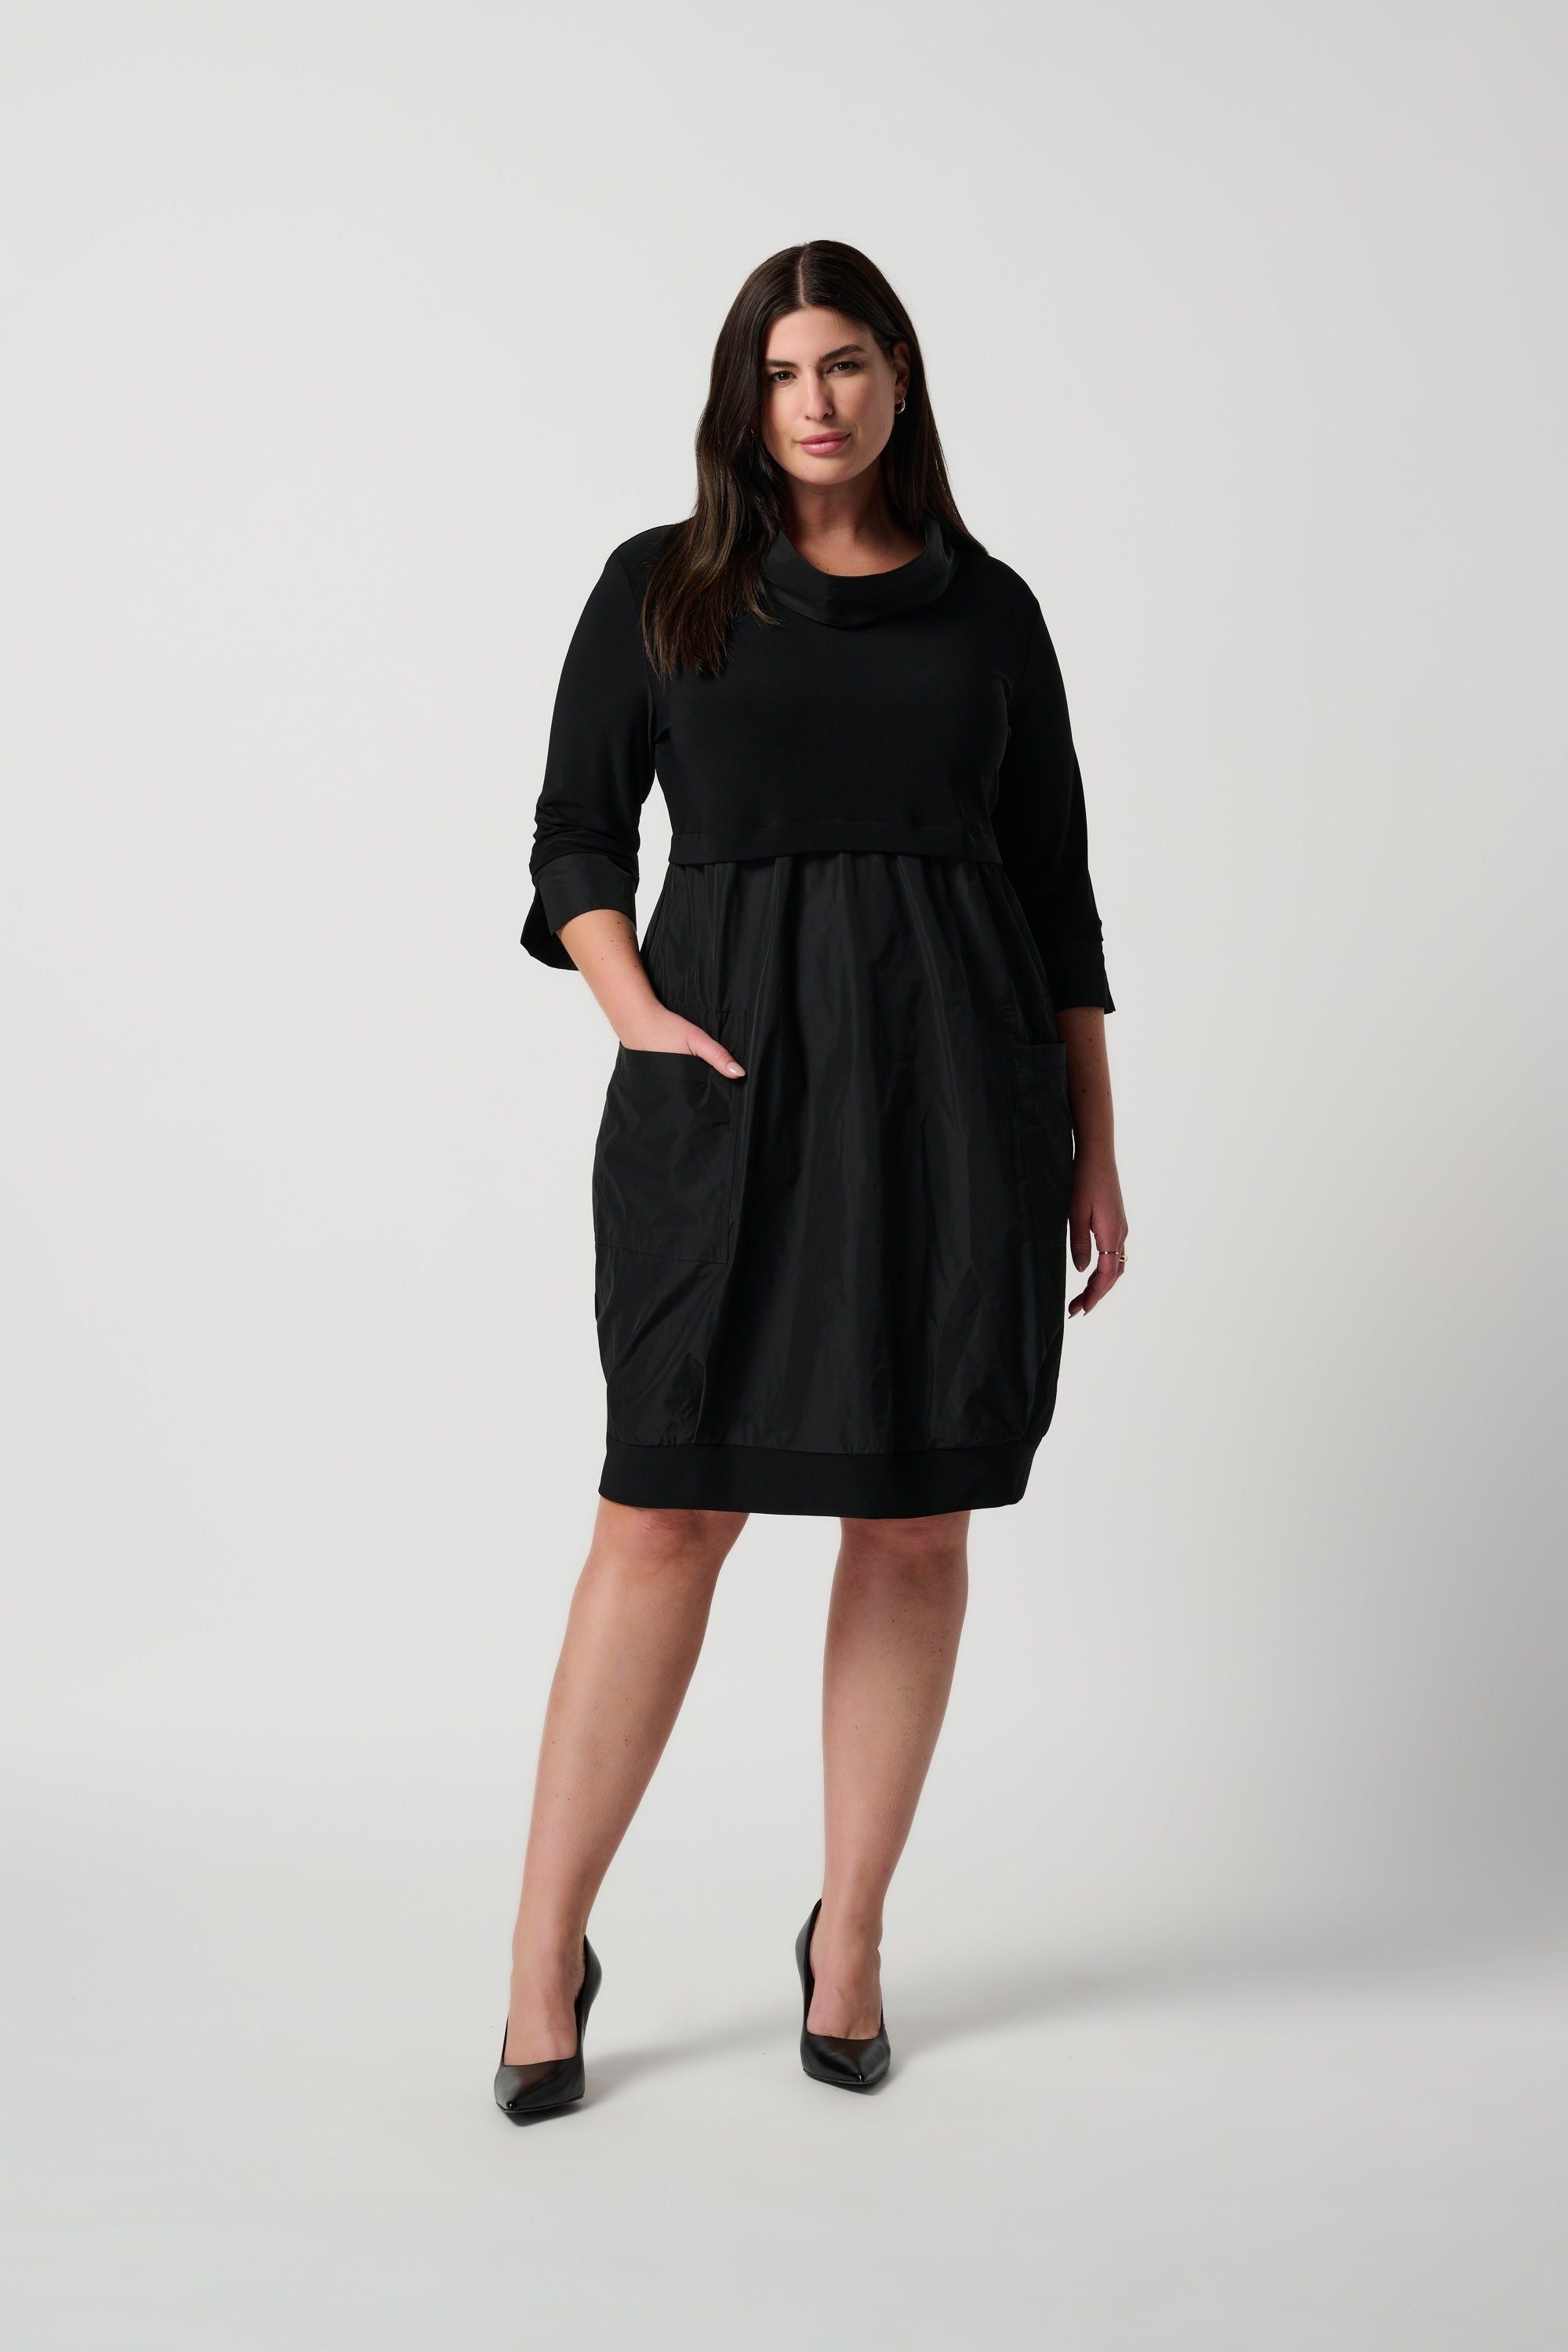 Joseph Ribkoff Miracle Dress - Style 173444TT, front3, black